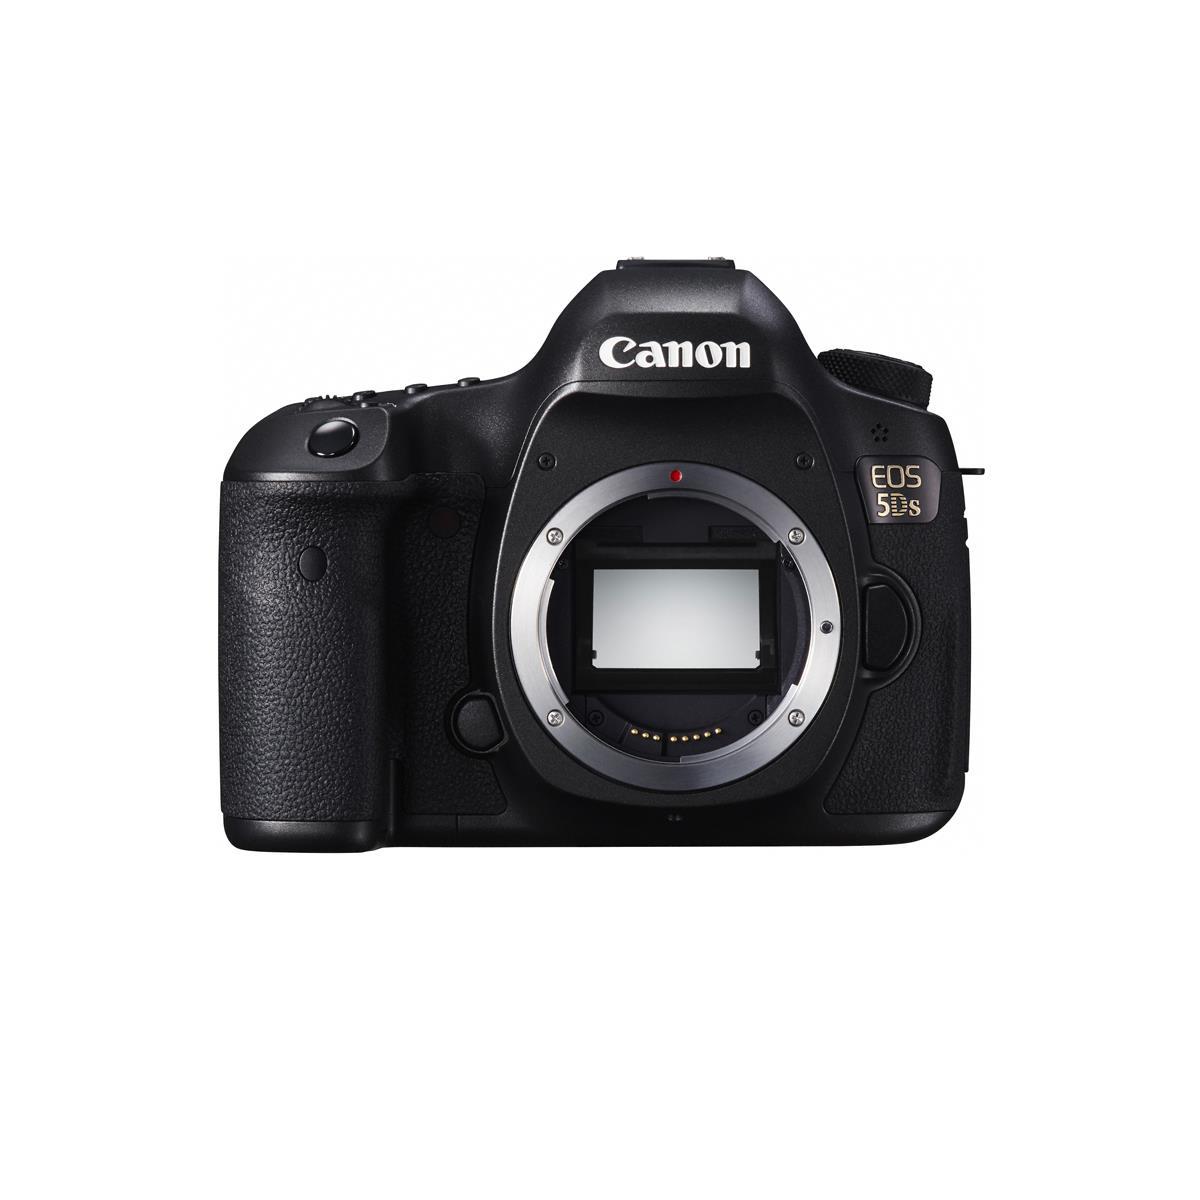 Canon EOS 5DS DSLR Body